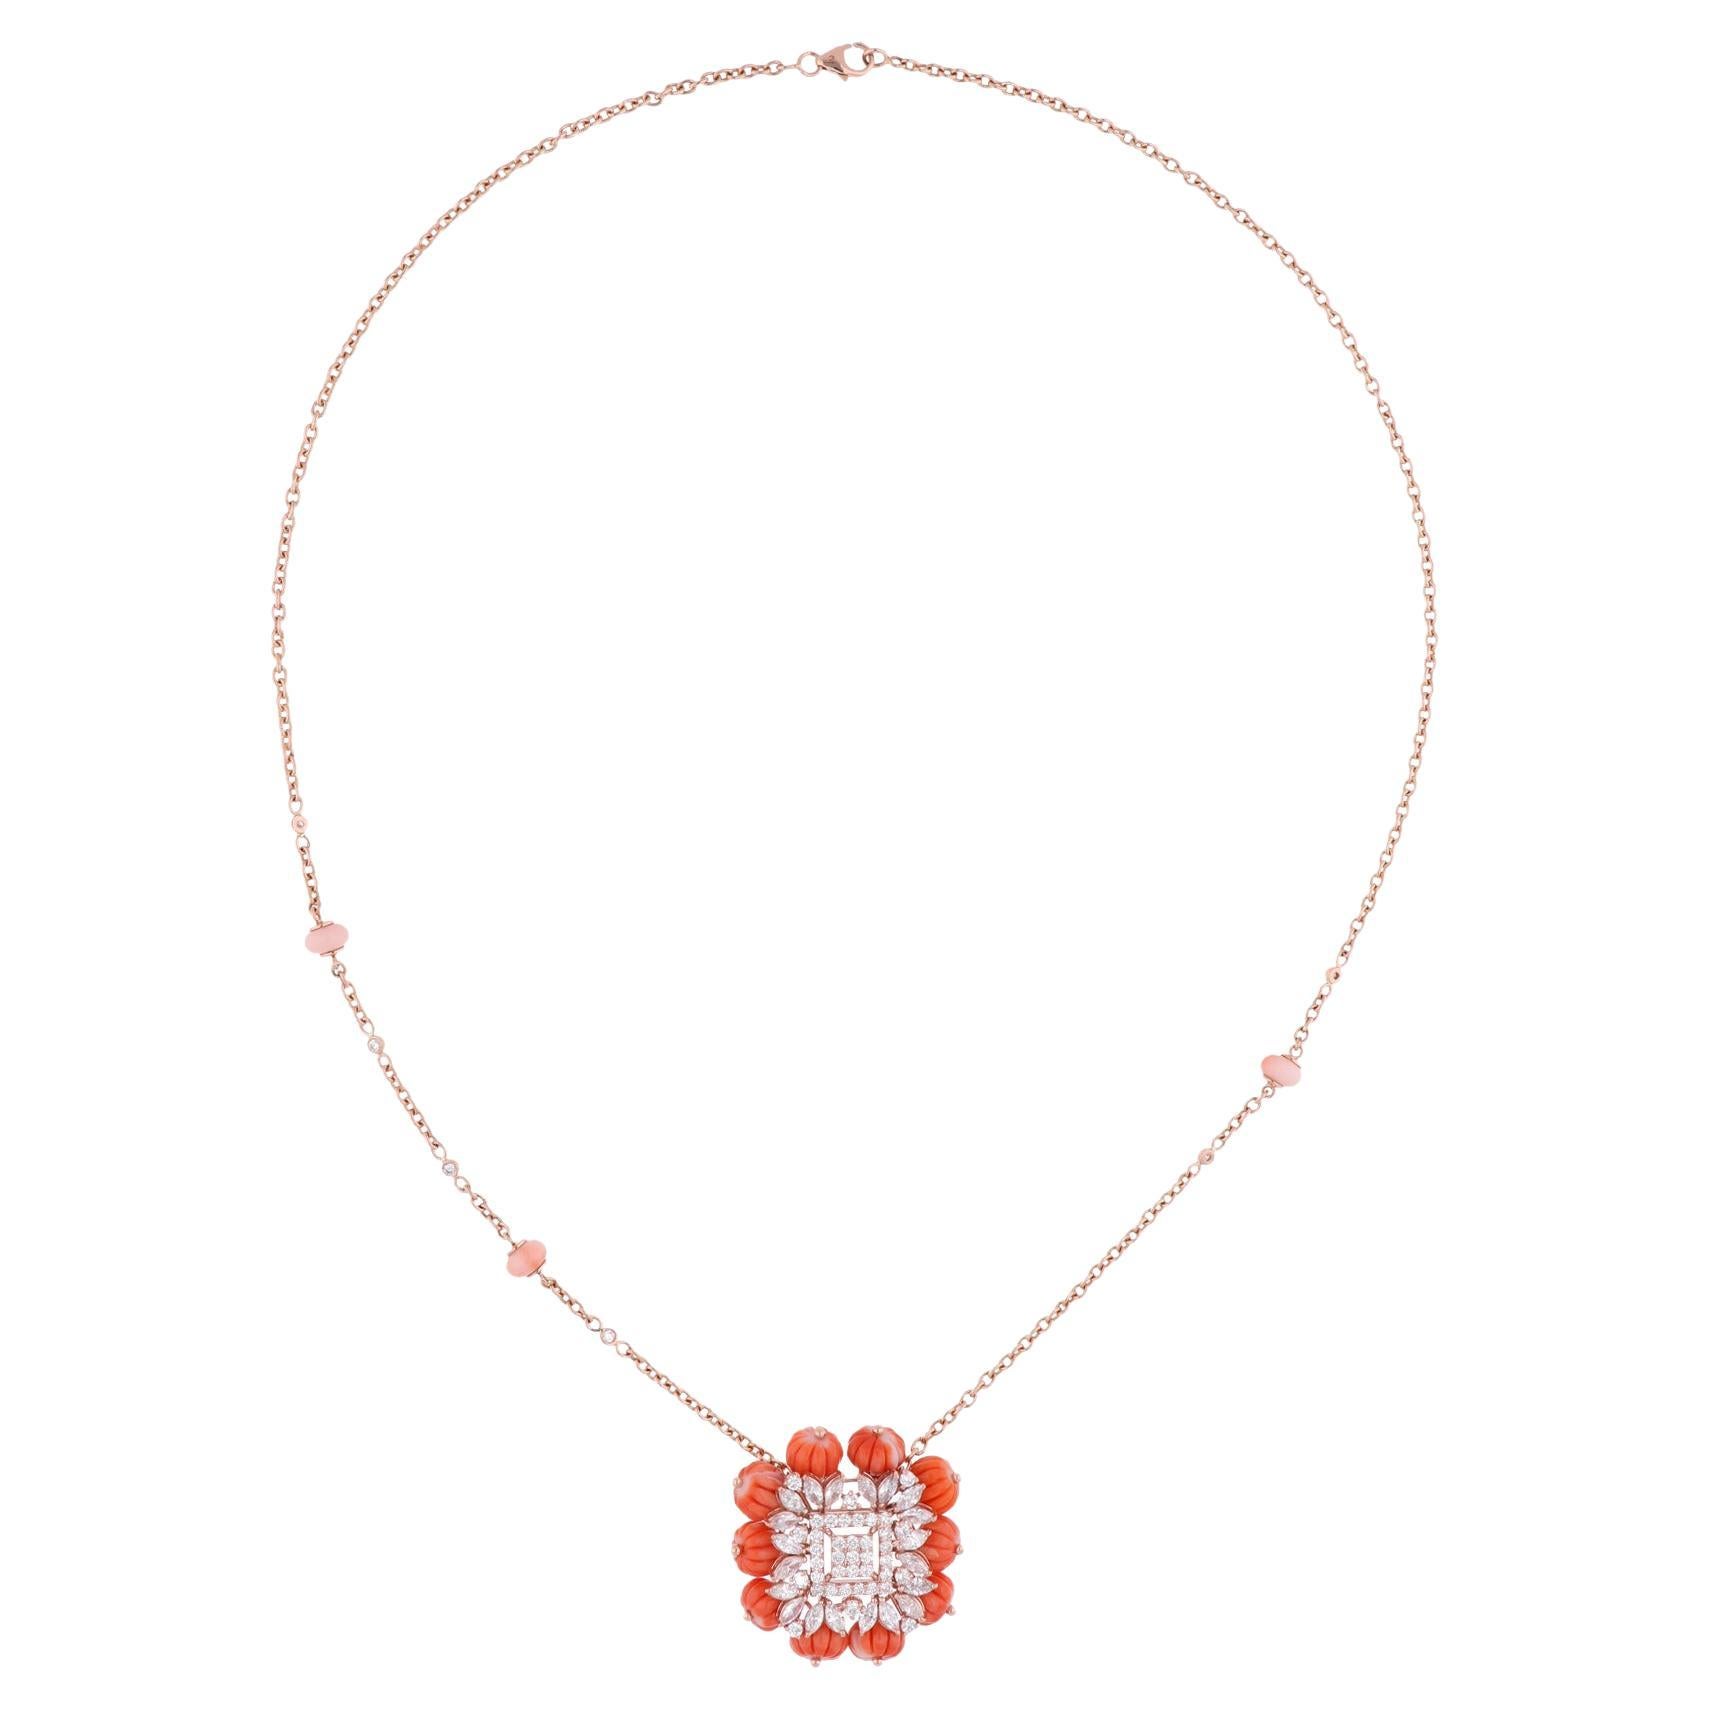 Collier pendentif breloque en or rose 18 carats, perles de corail, pierres précieuses et diamants